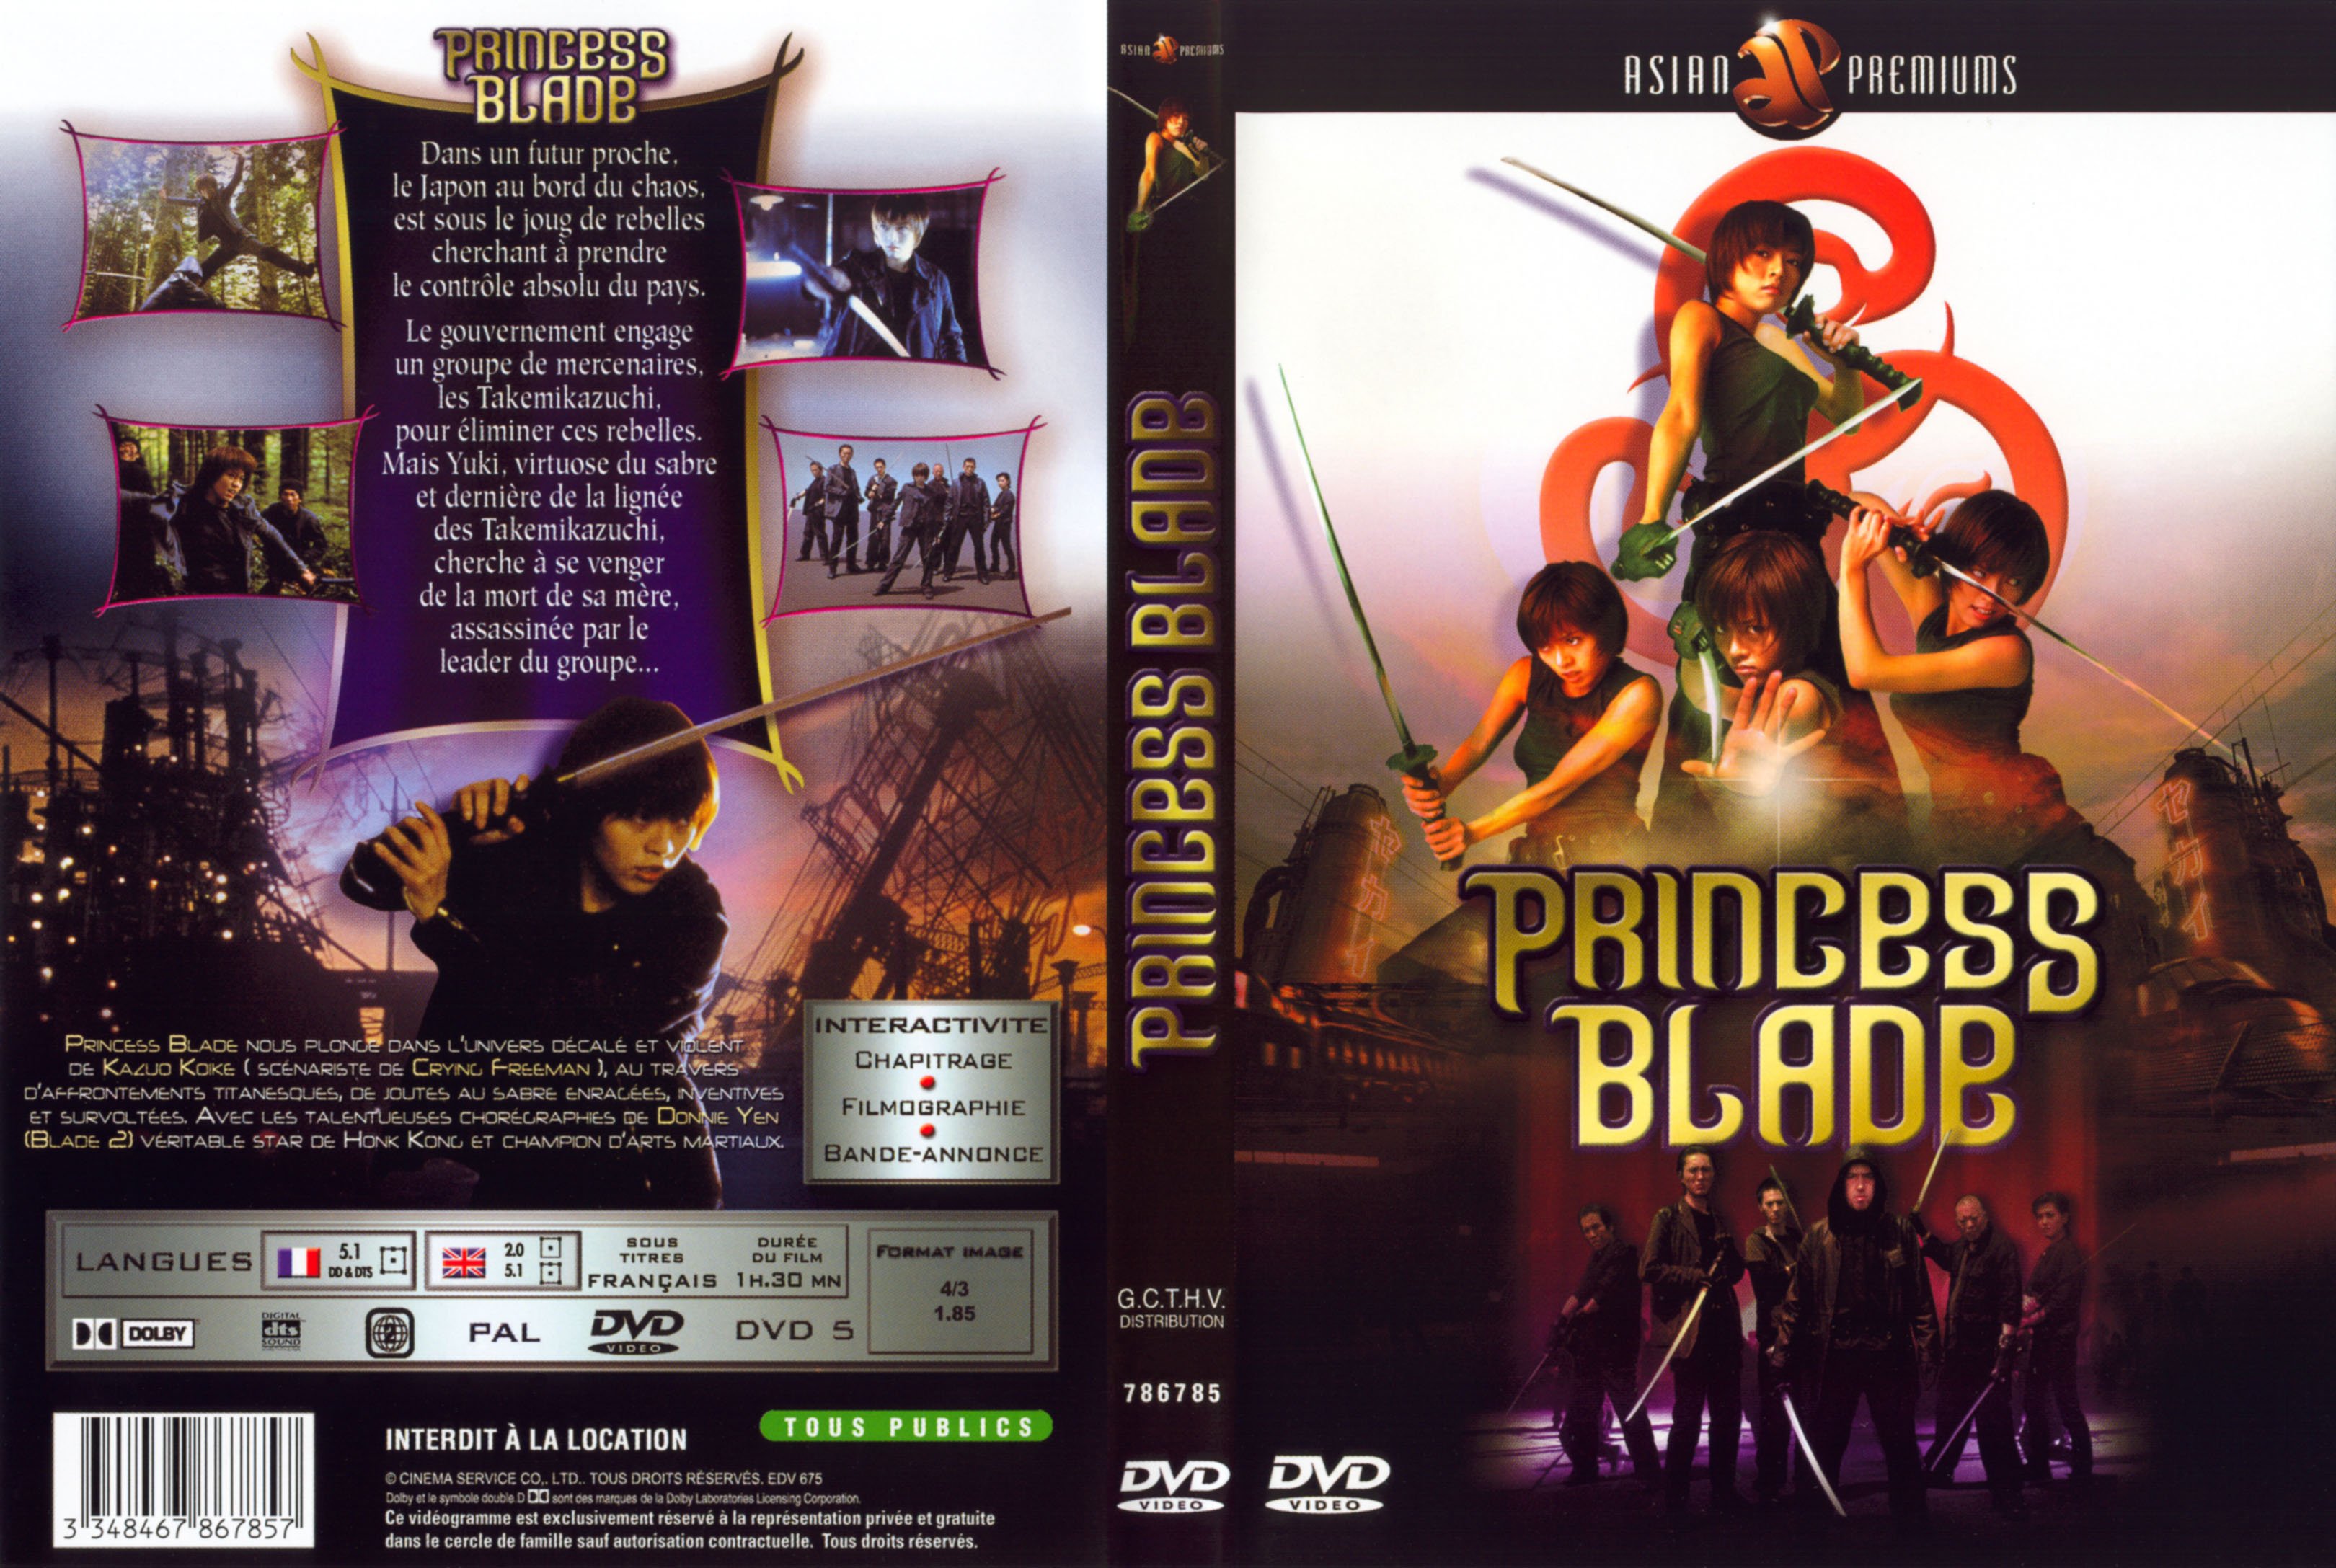 Jaquette DVD Princess blade